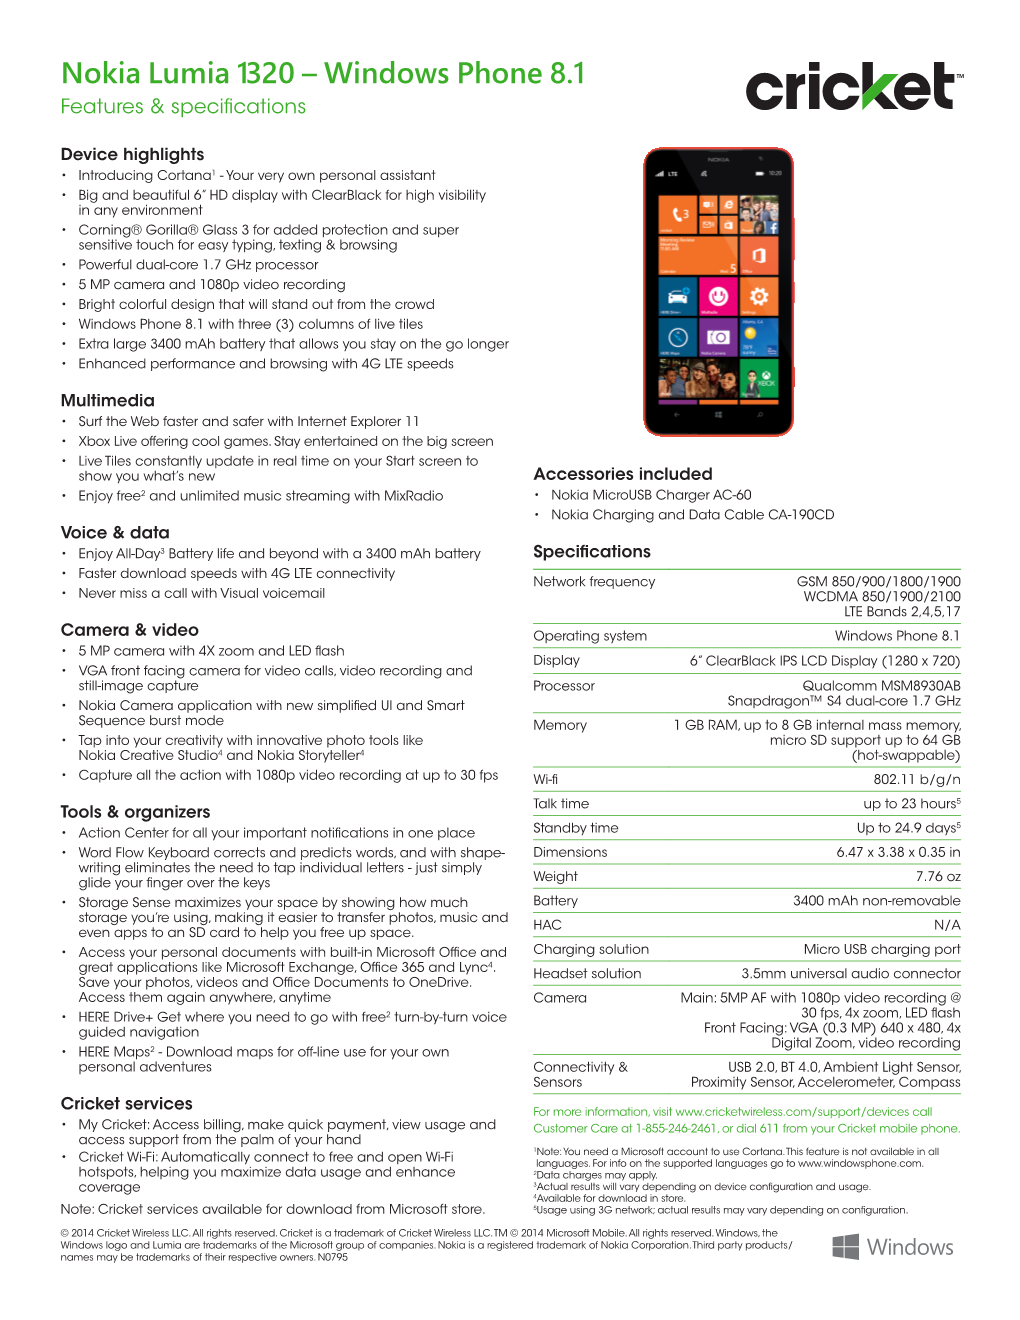 Nokia Lumia 1320 – Windows Phone 8.1 Features & Specifications